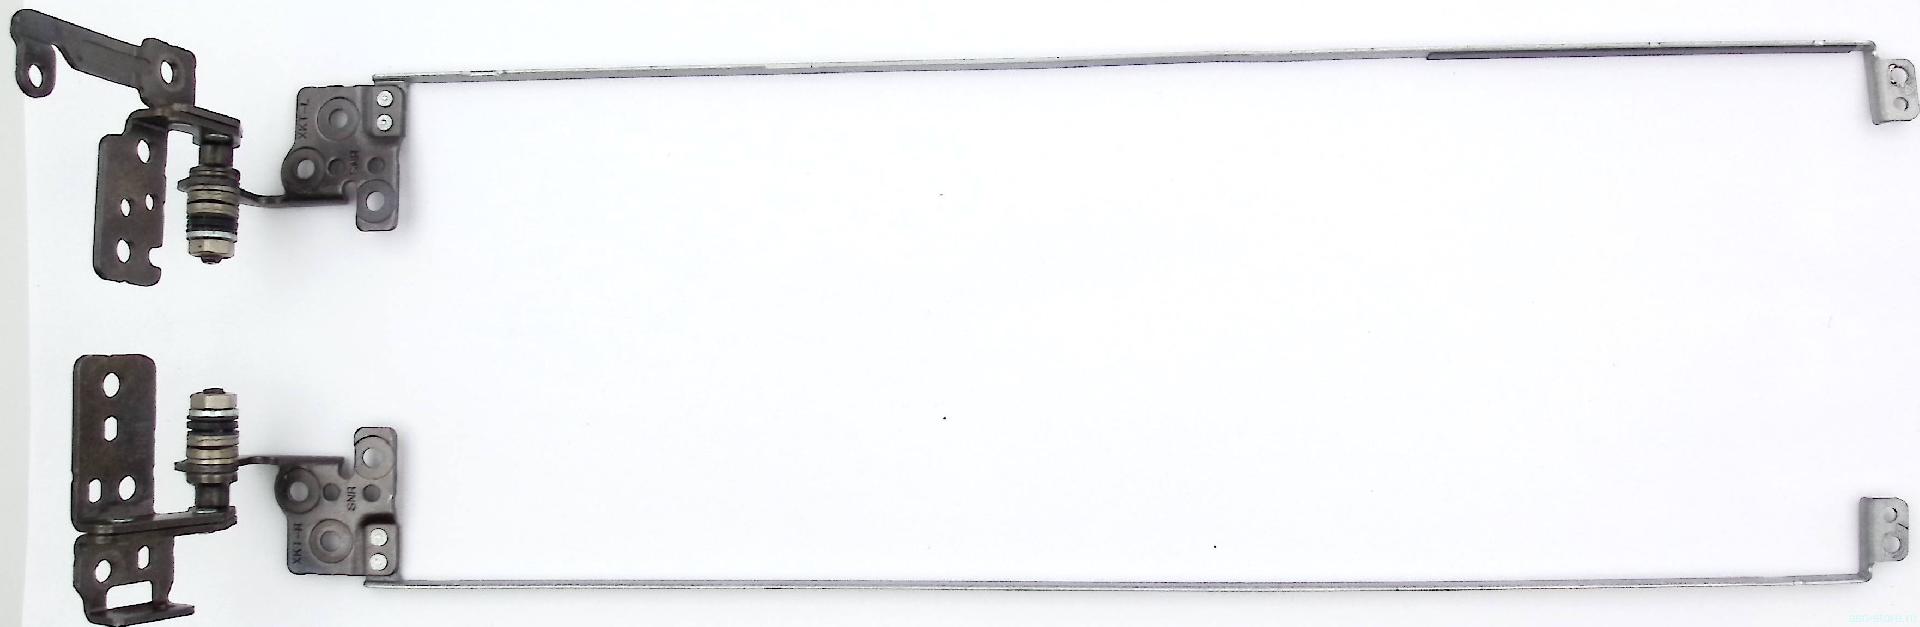 Петли крышки ноутбука Asus X571